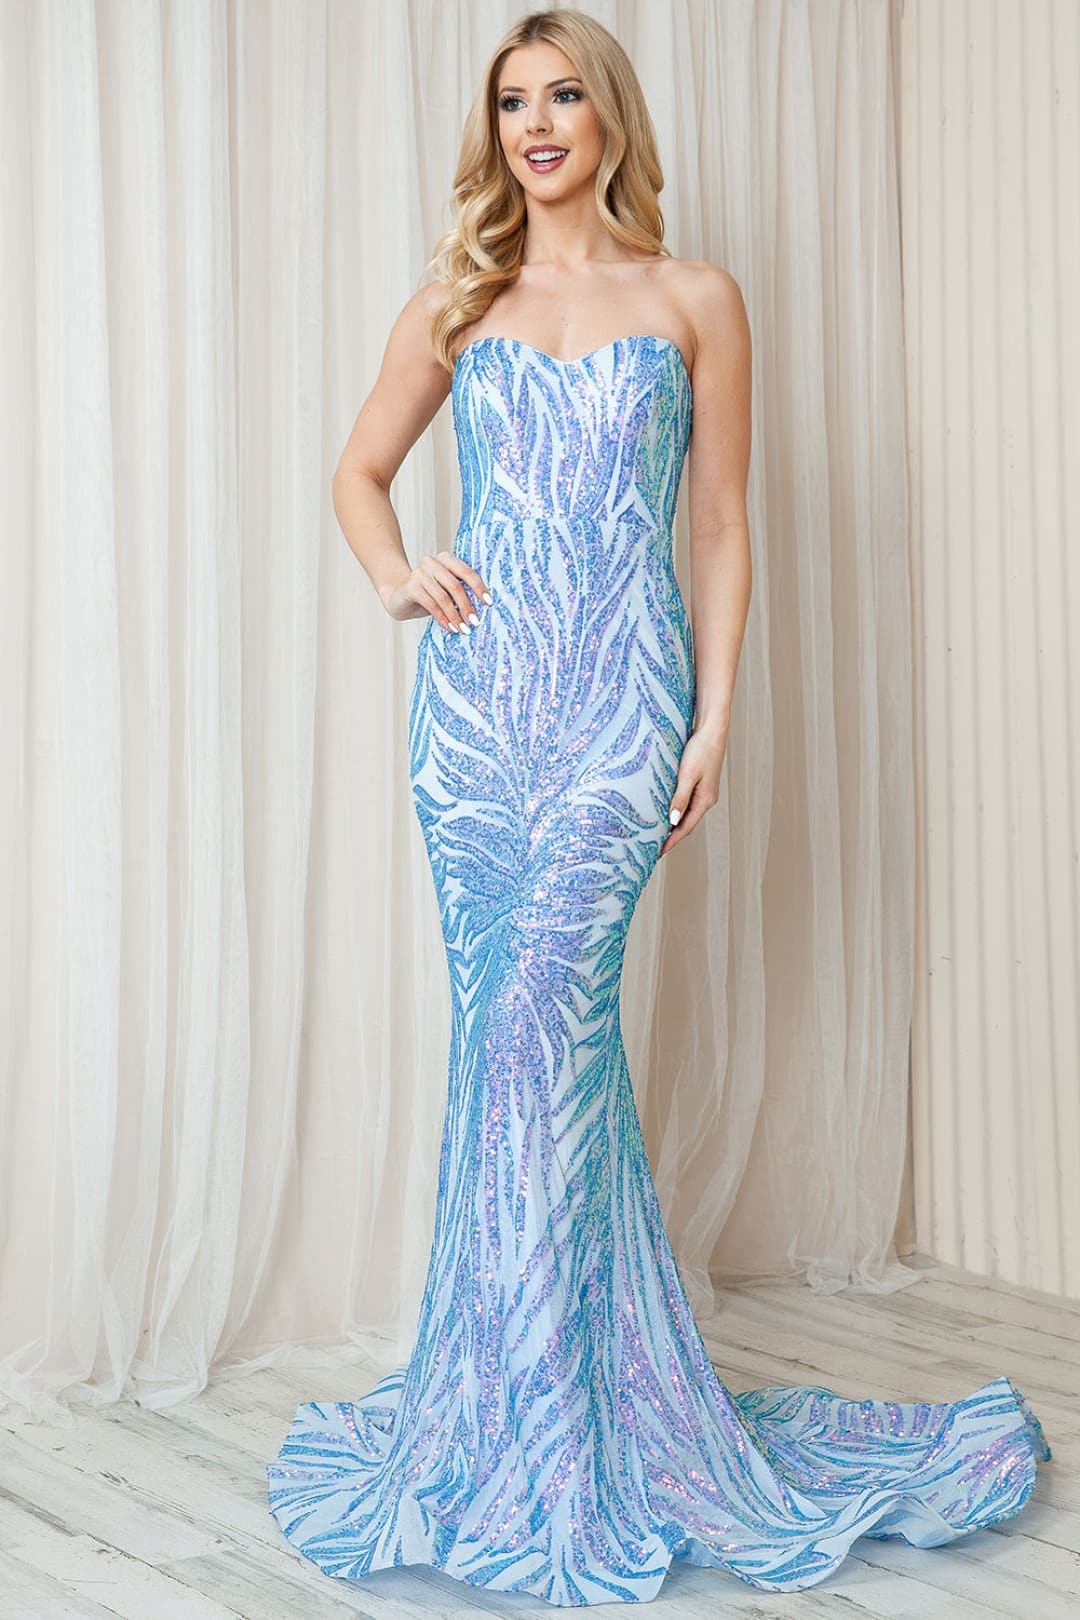 Glittery Mermaid Dress - Blue